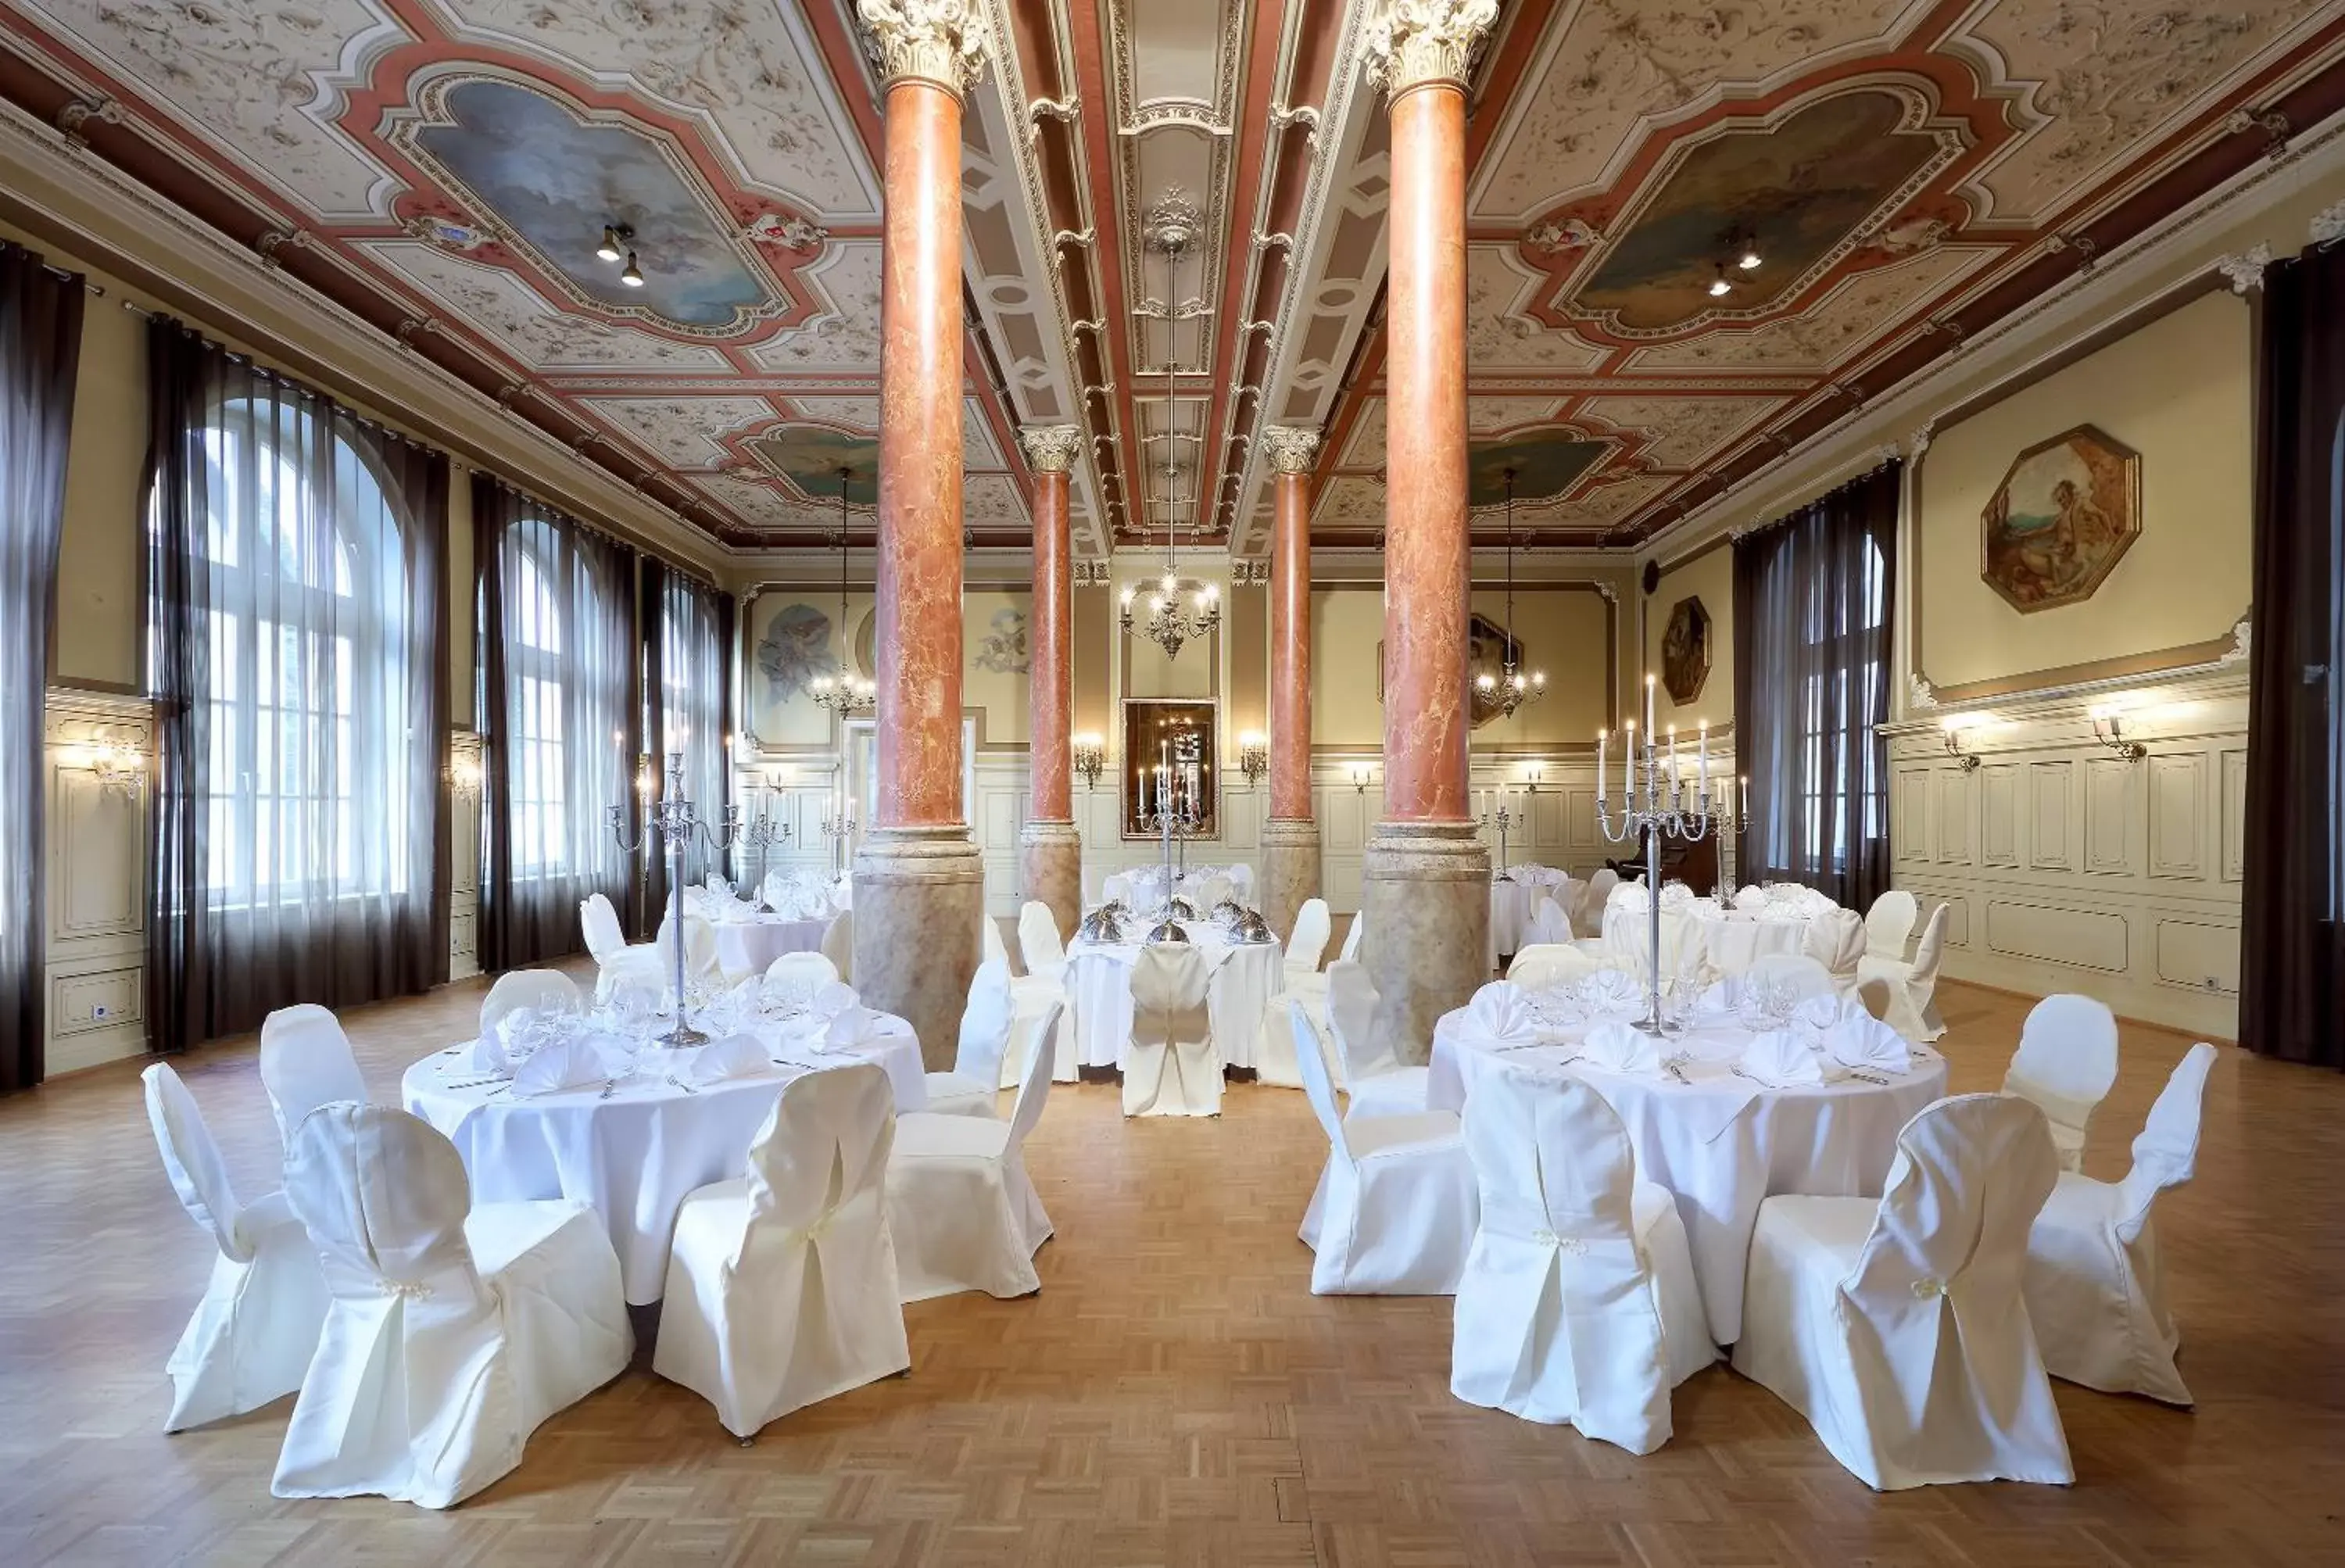 Banquet/Function facilities, Banquet Facilities in Eurostars Park Hotel Maximilian